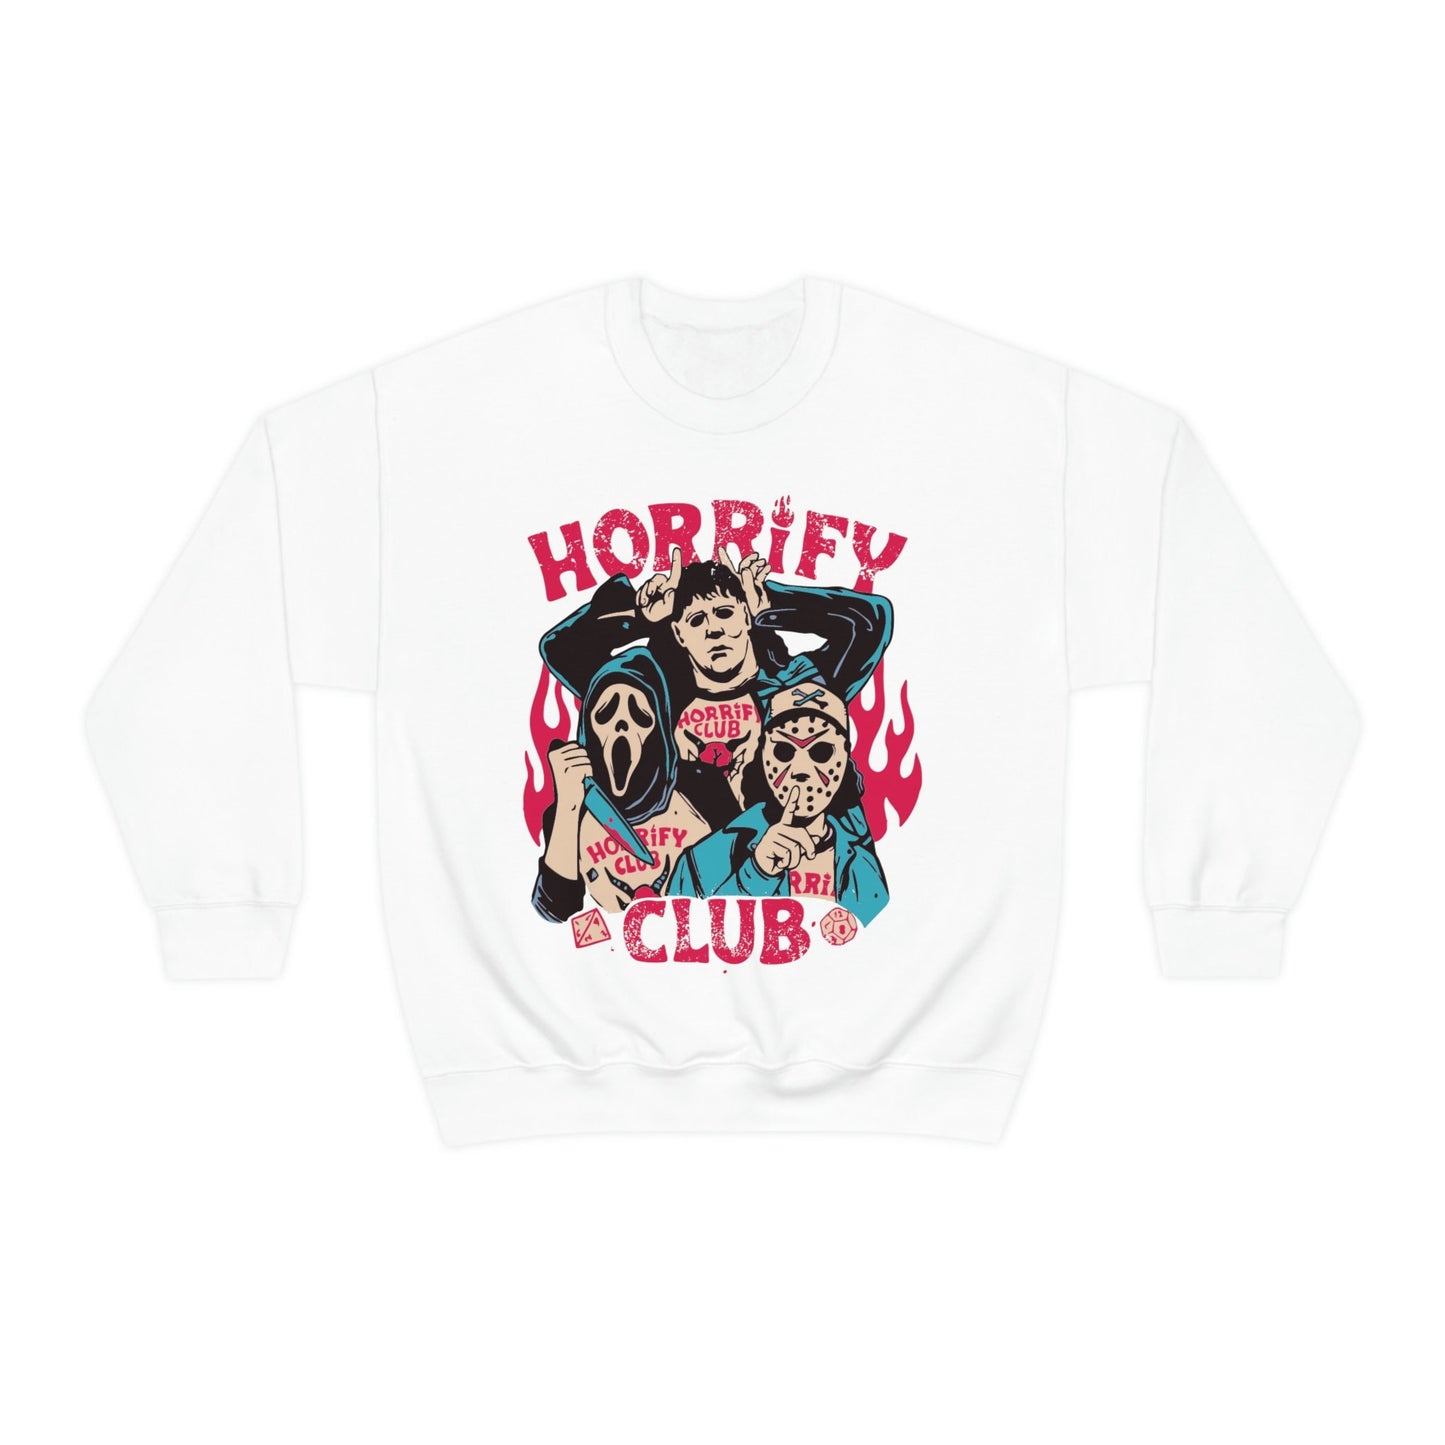 Horrifying Club Sweatshirt, Ghostface Sweatshirt, Horror Hoodie, Horror merch, Michael Meyers, Jason, Eddie Munson, Horror aesthetic